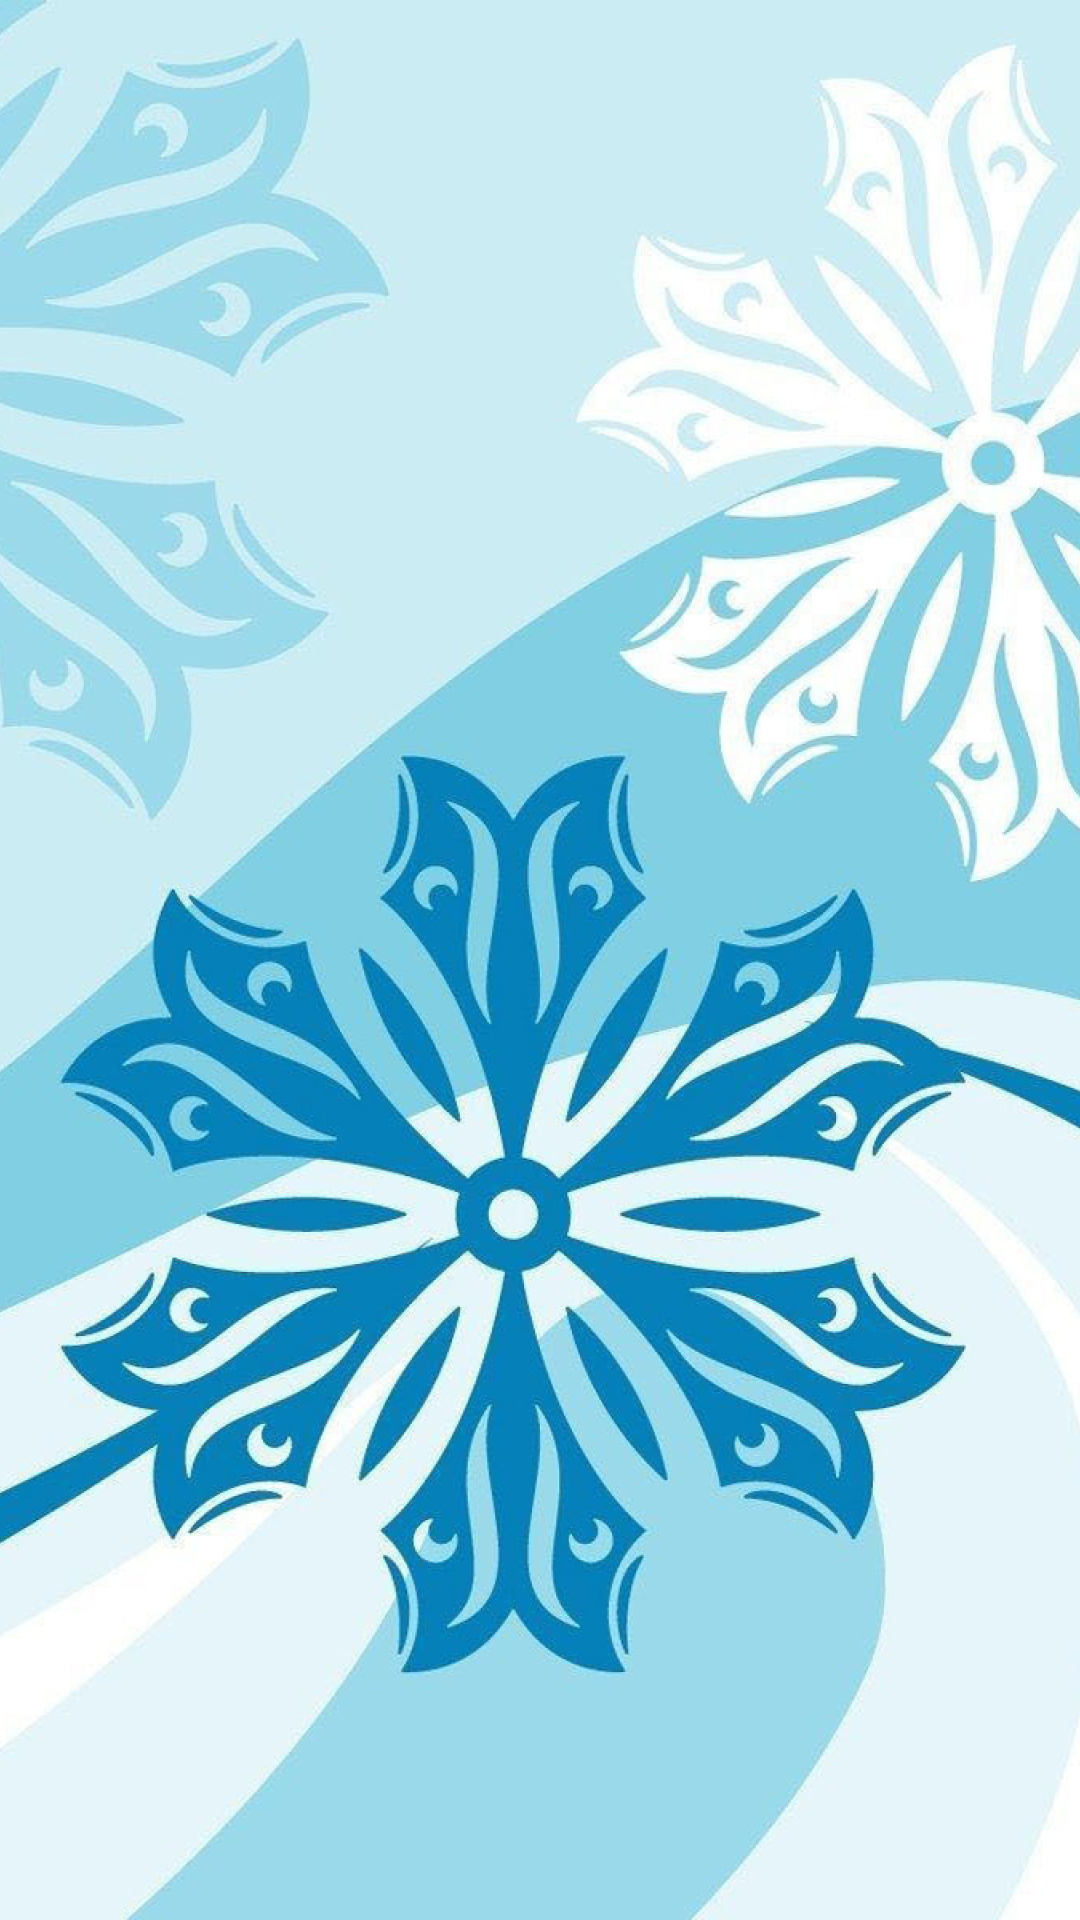 Snowflakes Patterns wallpaper 1080x1920